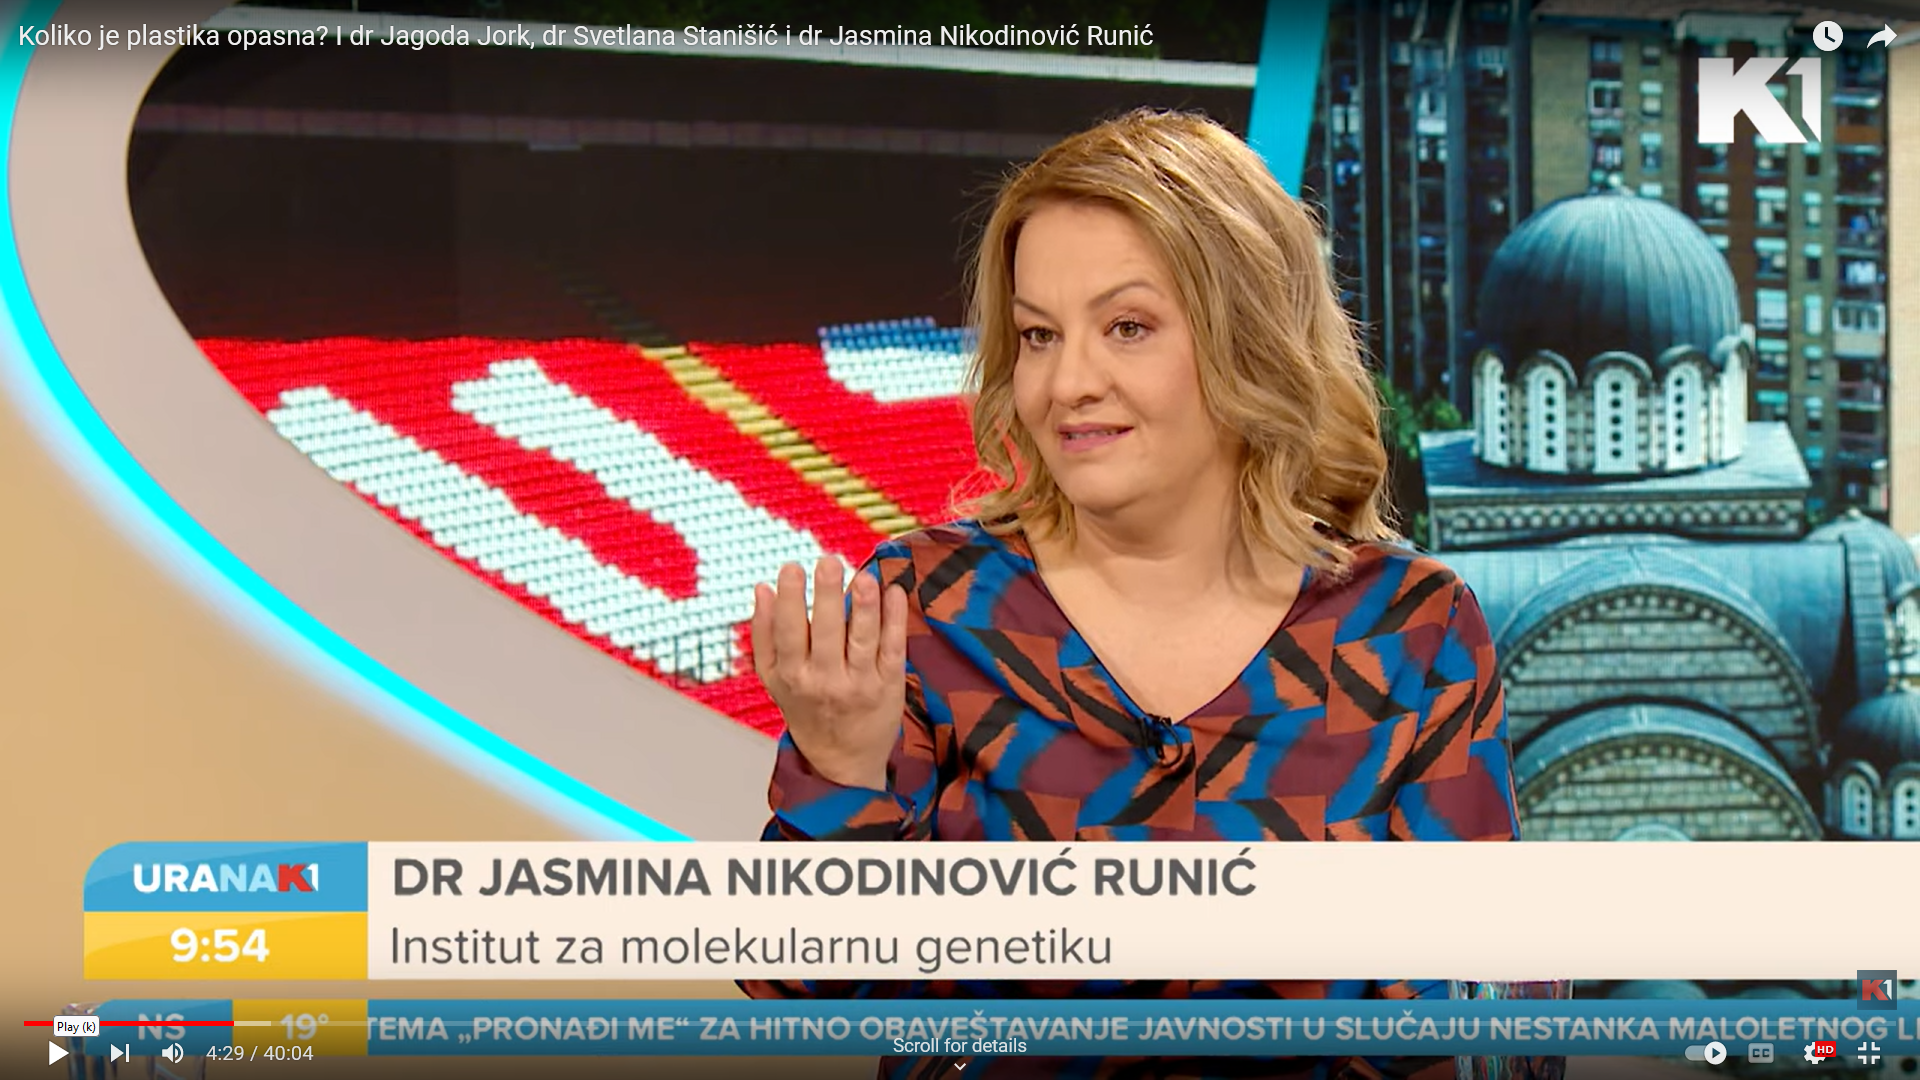 Dr. Jasmina Nikodinovic-Runic as a guest in TV show “Uranak” 